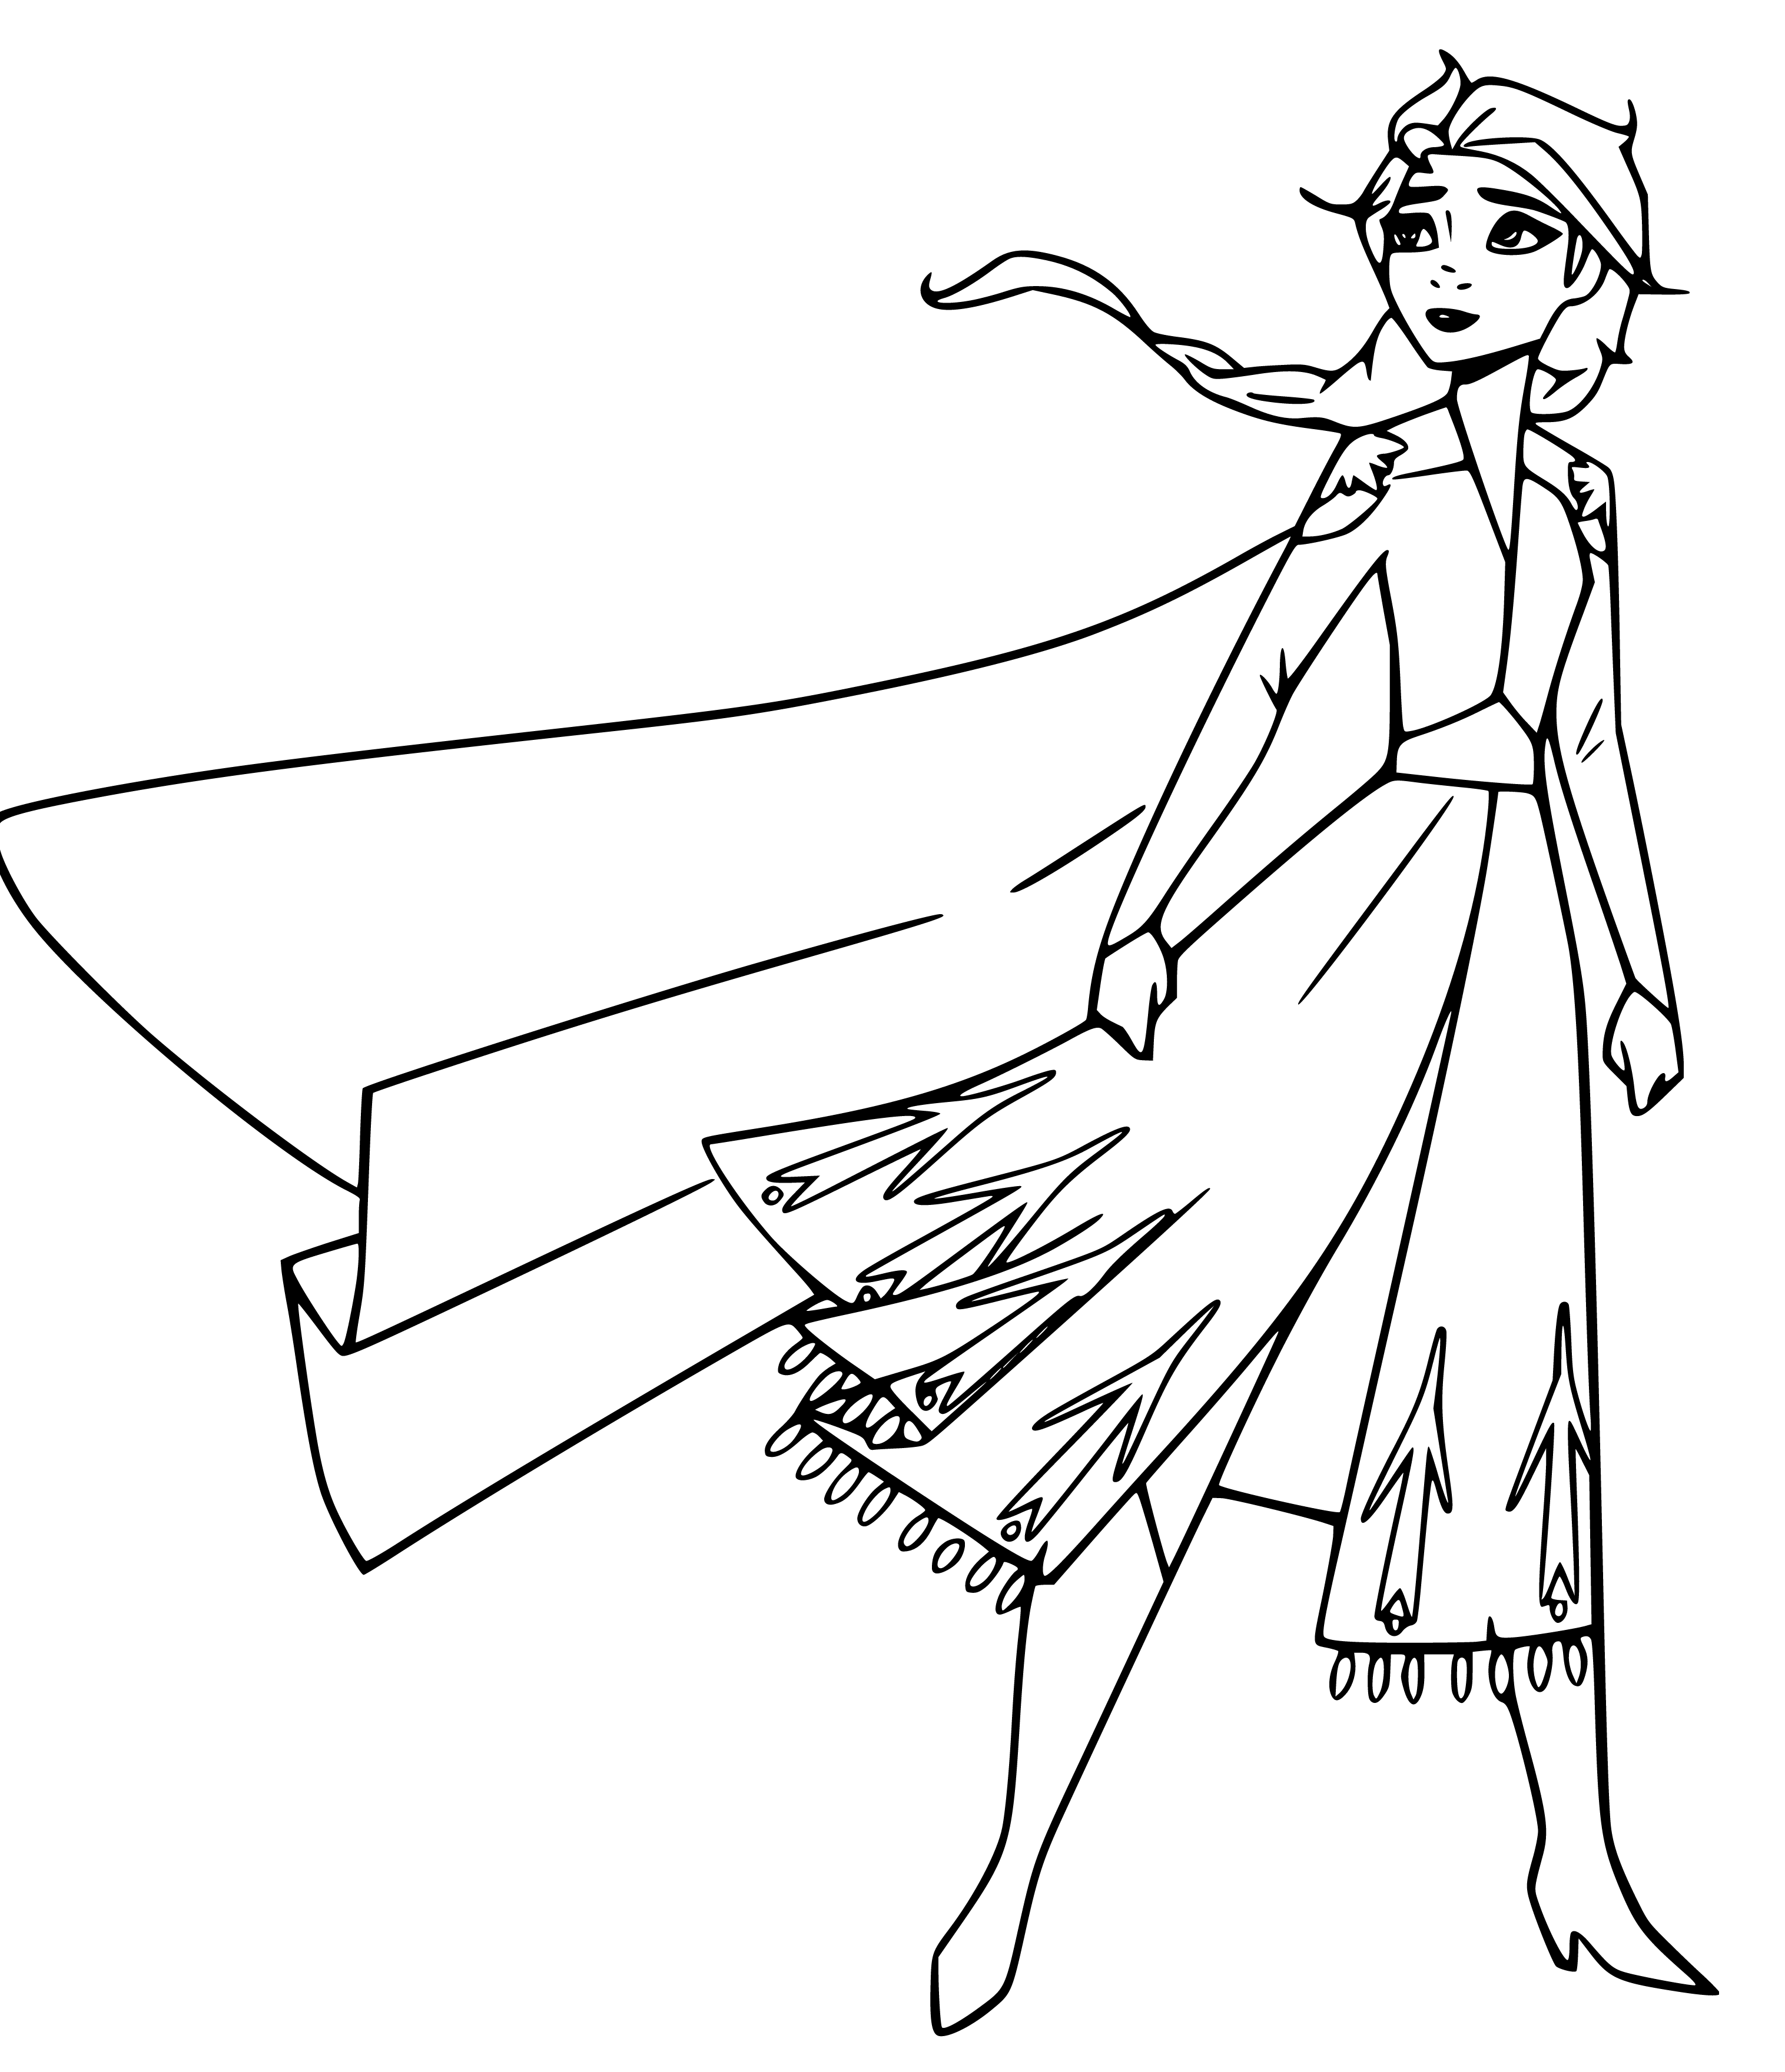 Princess Elsa in the Wind Coloring Sheet - SheetalColor.com